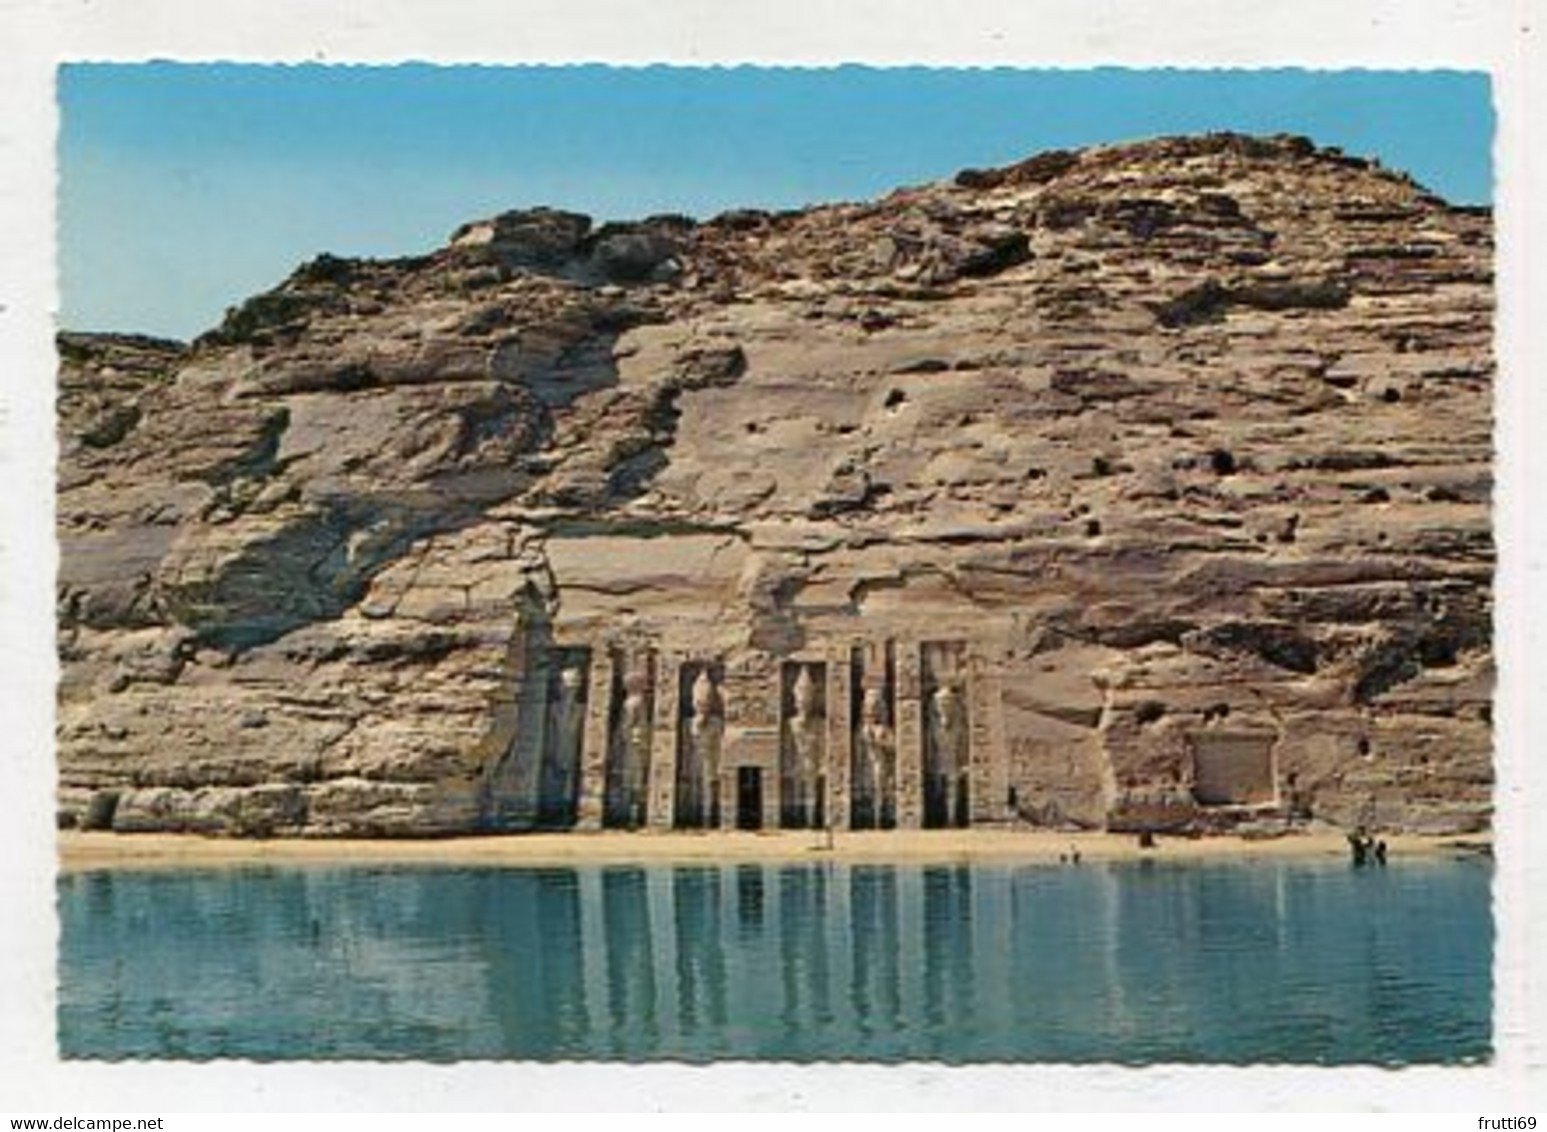 AK 057706 EGYPT - Abu Simbel - Small Rock Temple - Tempel Von Abu Simbel